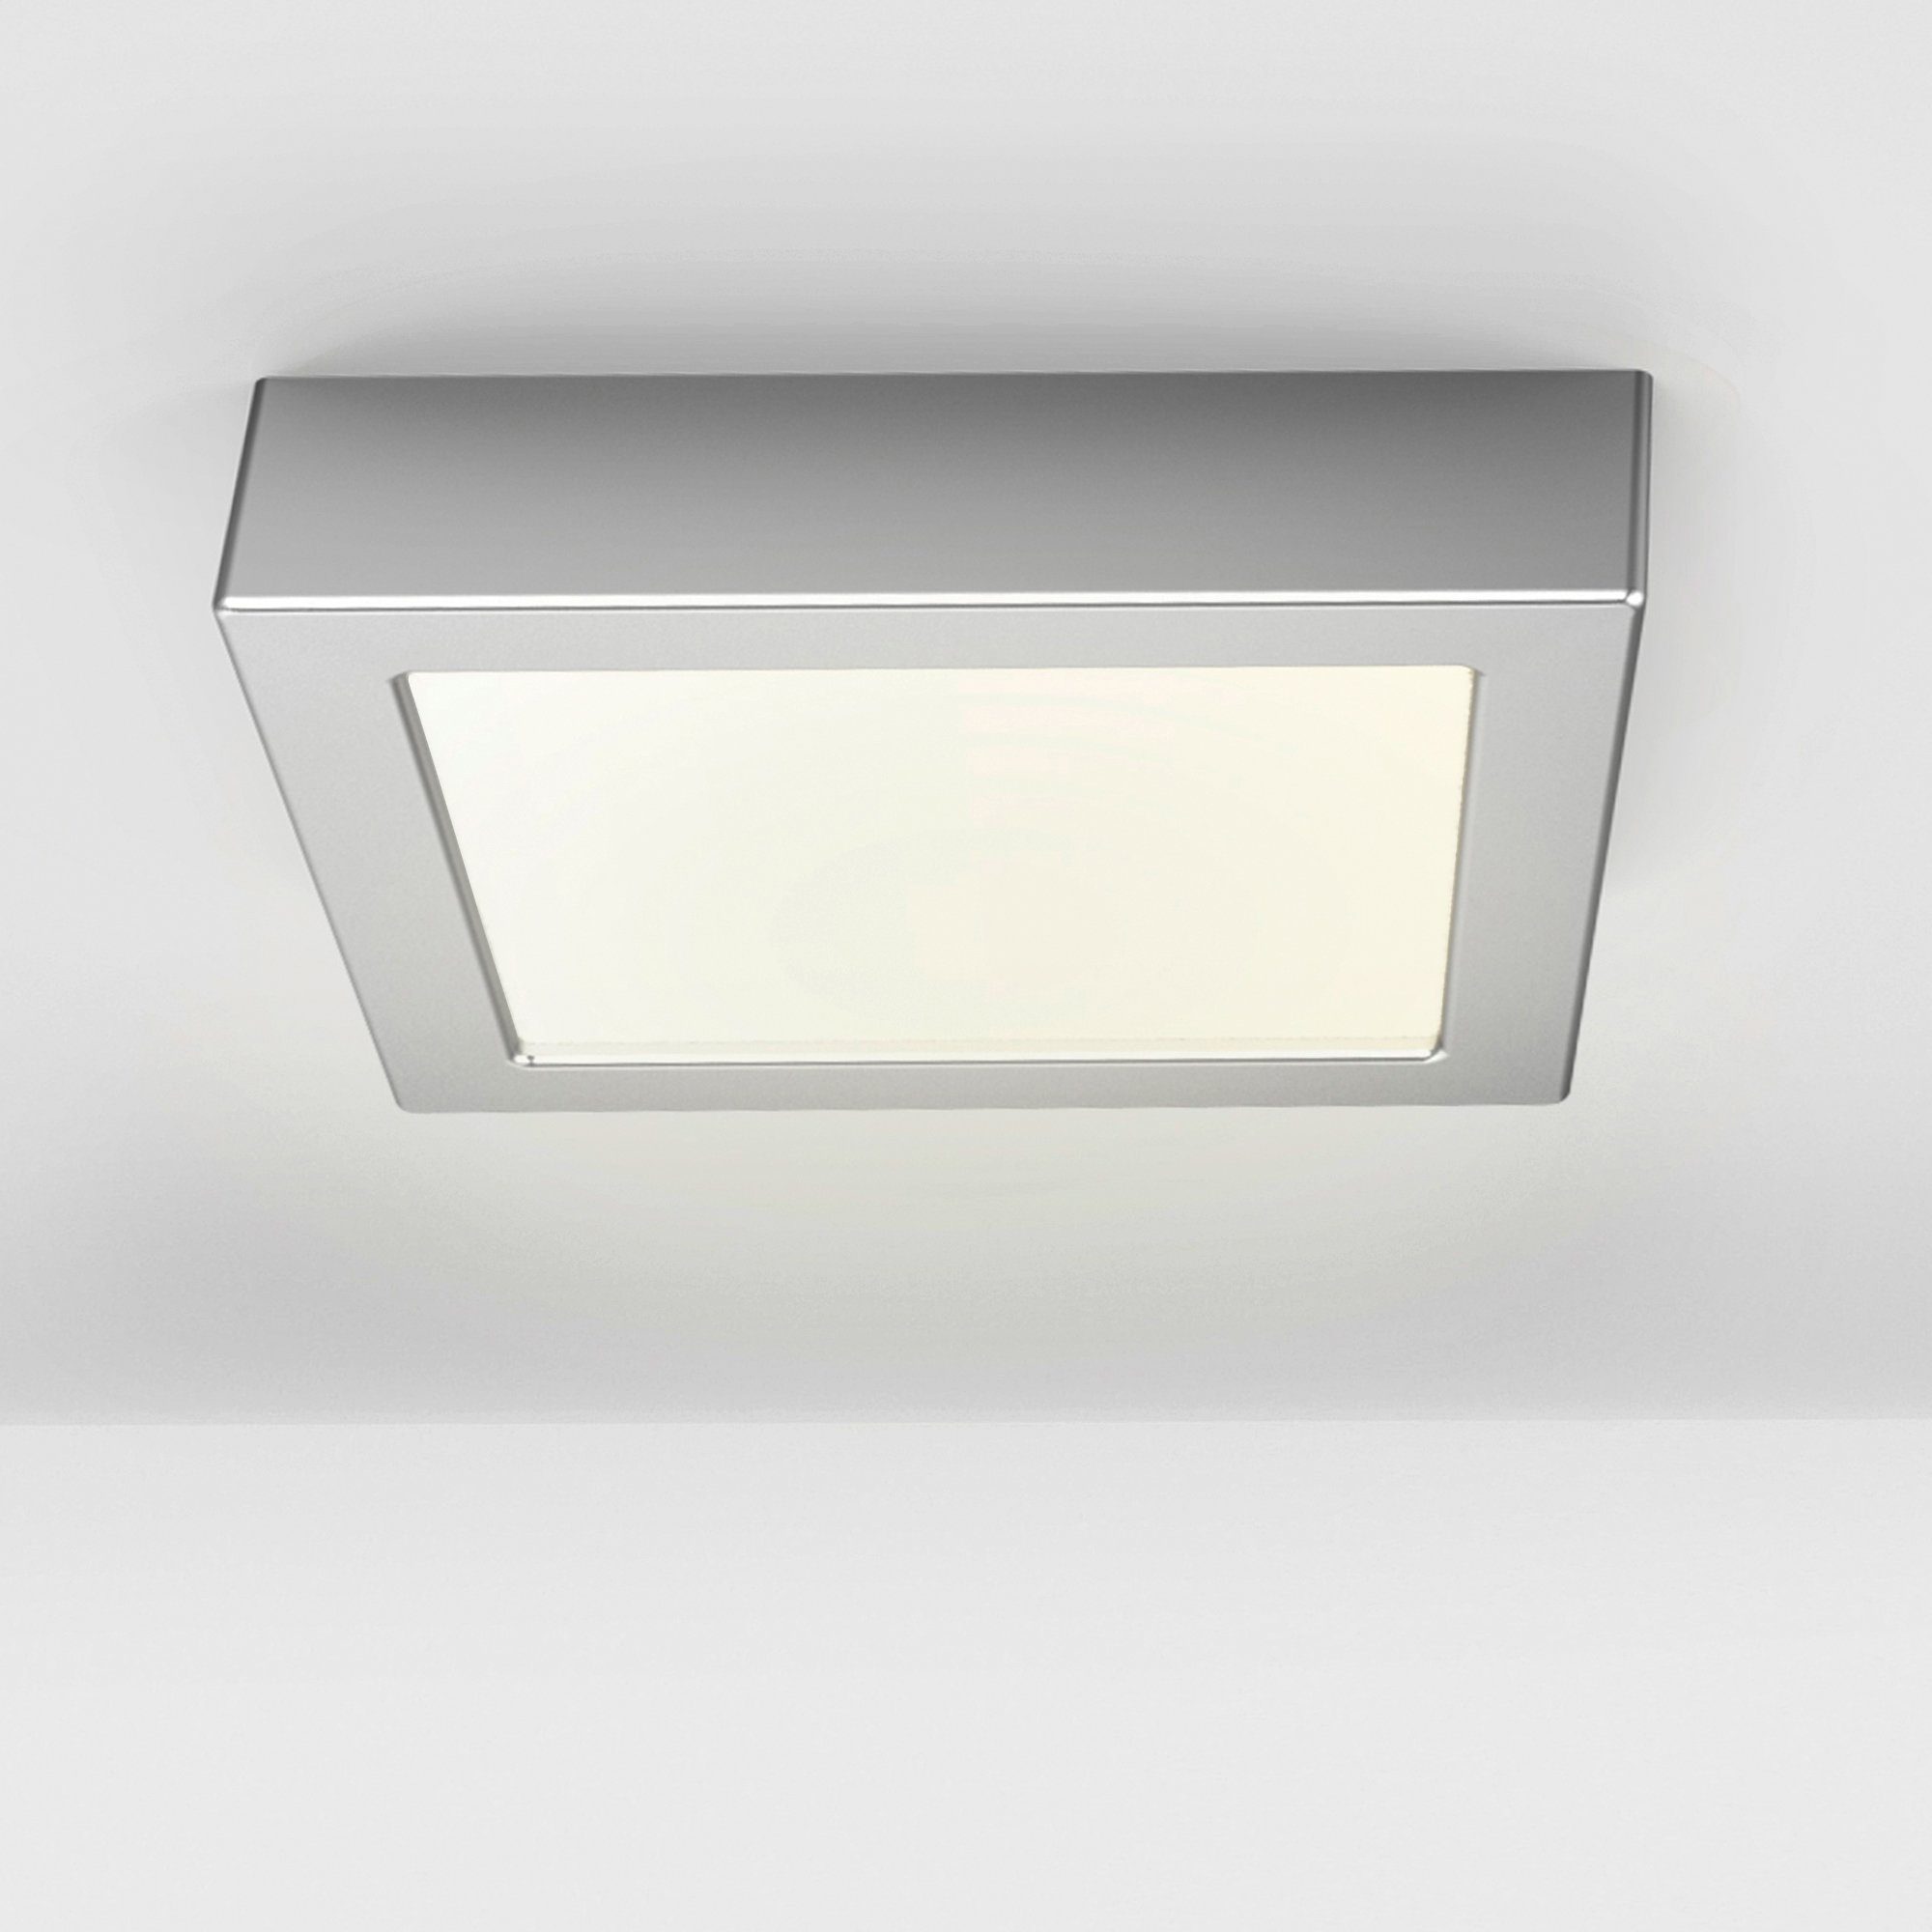 LED LED B.K.Licht 12W LED fest Garnet, Unterbauleuchte Warmweiß, Panel Aufputzspot integriert, Aufbauleuchte Aufbaustrahler Lampe